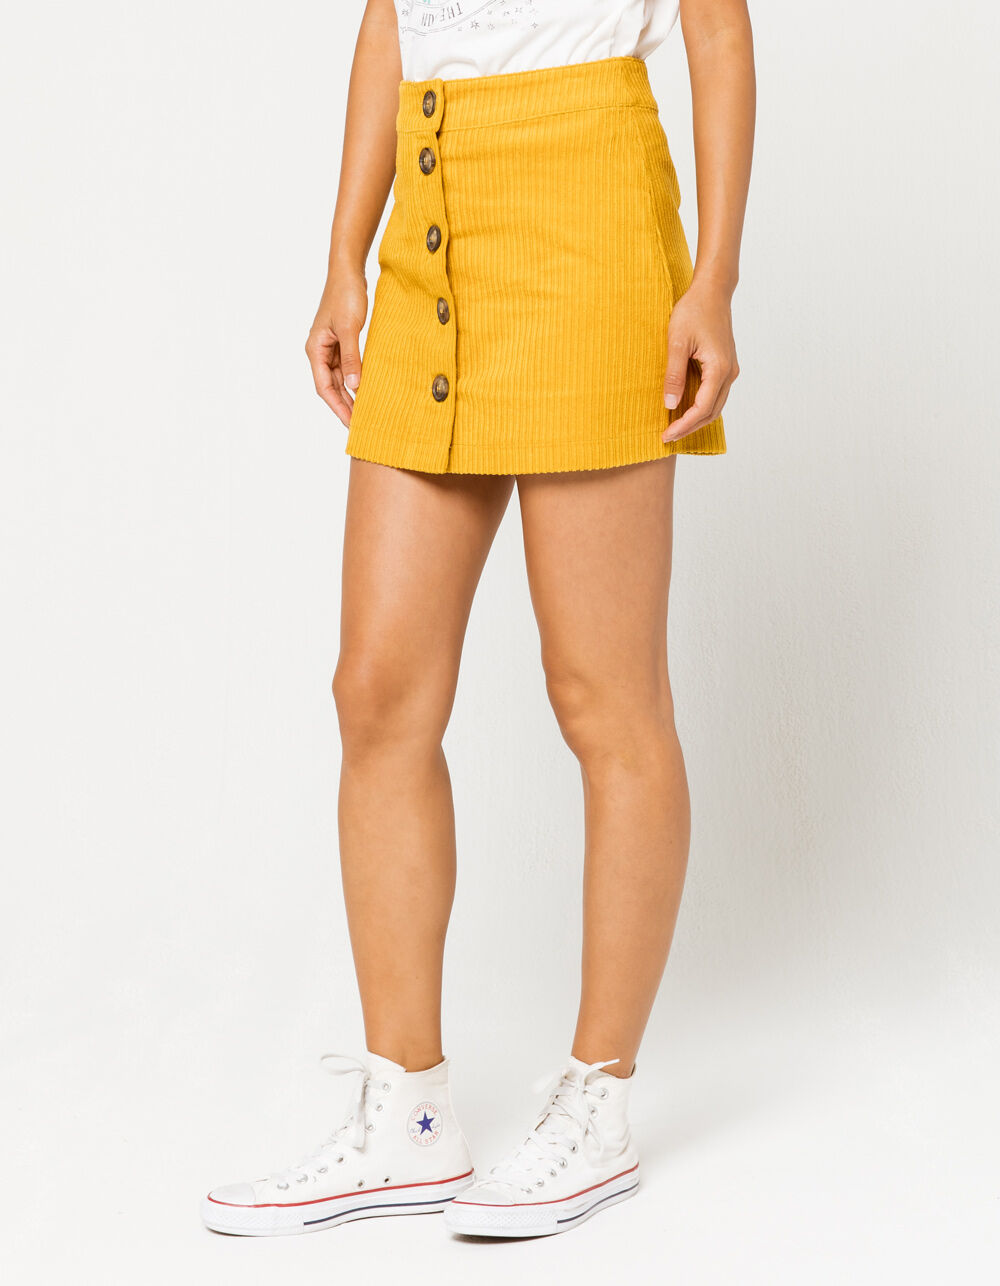 SKY AND SPARROW Corduroy Button Front Mustard Skirt - MUSTARD | Tillys